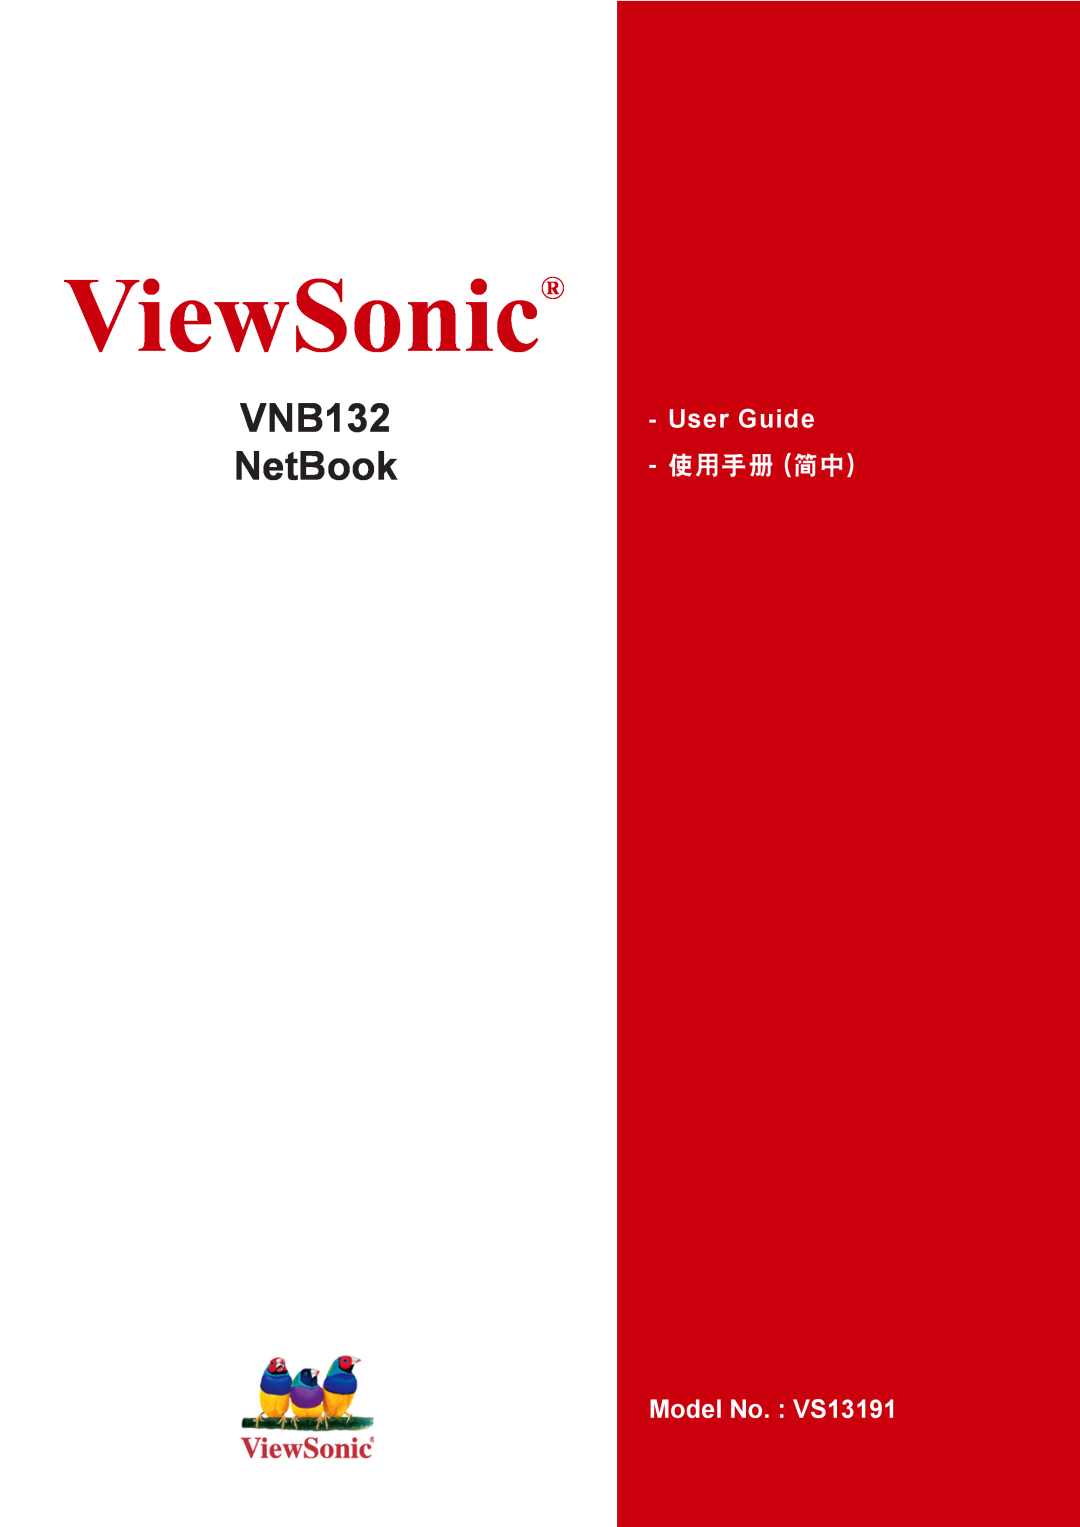 ViewSonic manual ViewSonic, VNB132 NetBook, User Guide, 使用手冊 簡中, Model No. VS13191 